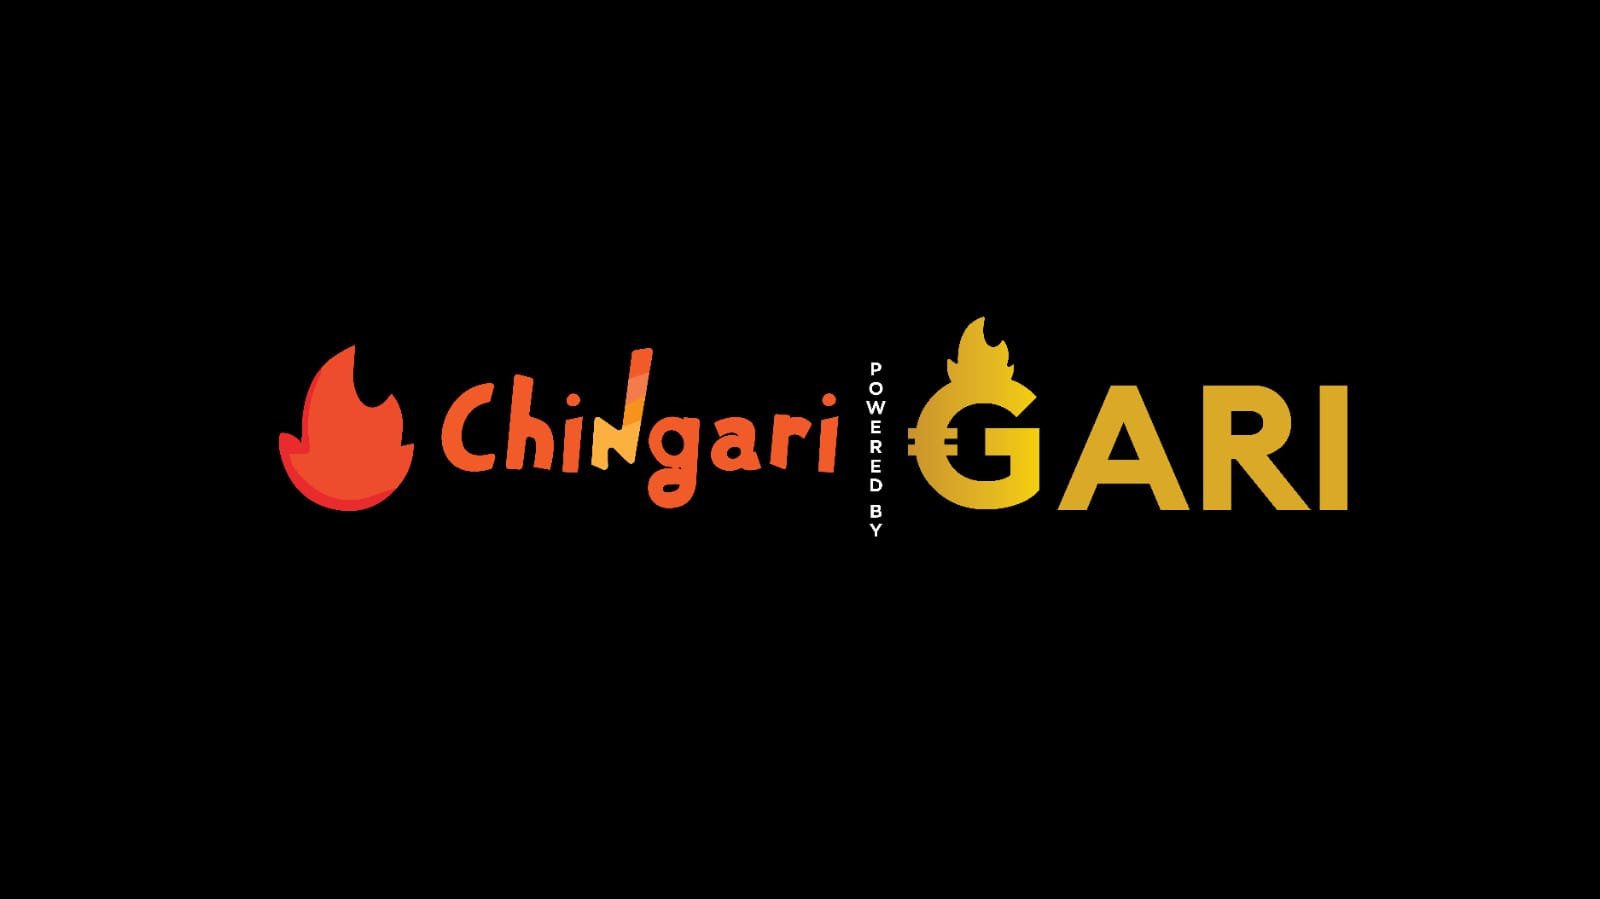 Chingari's festive campaign #DiwaliGARIWali applauded the top GARI miners of the season